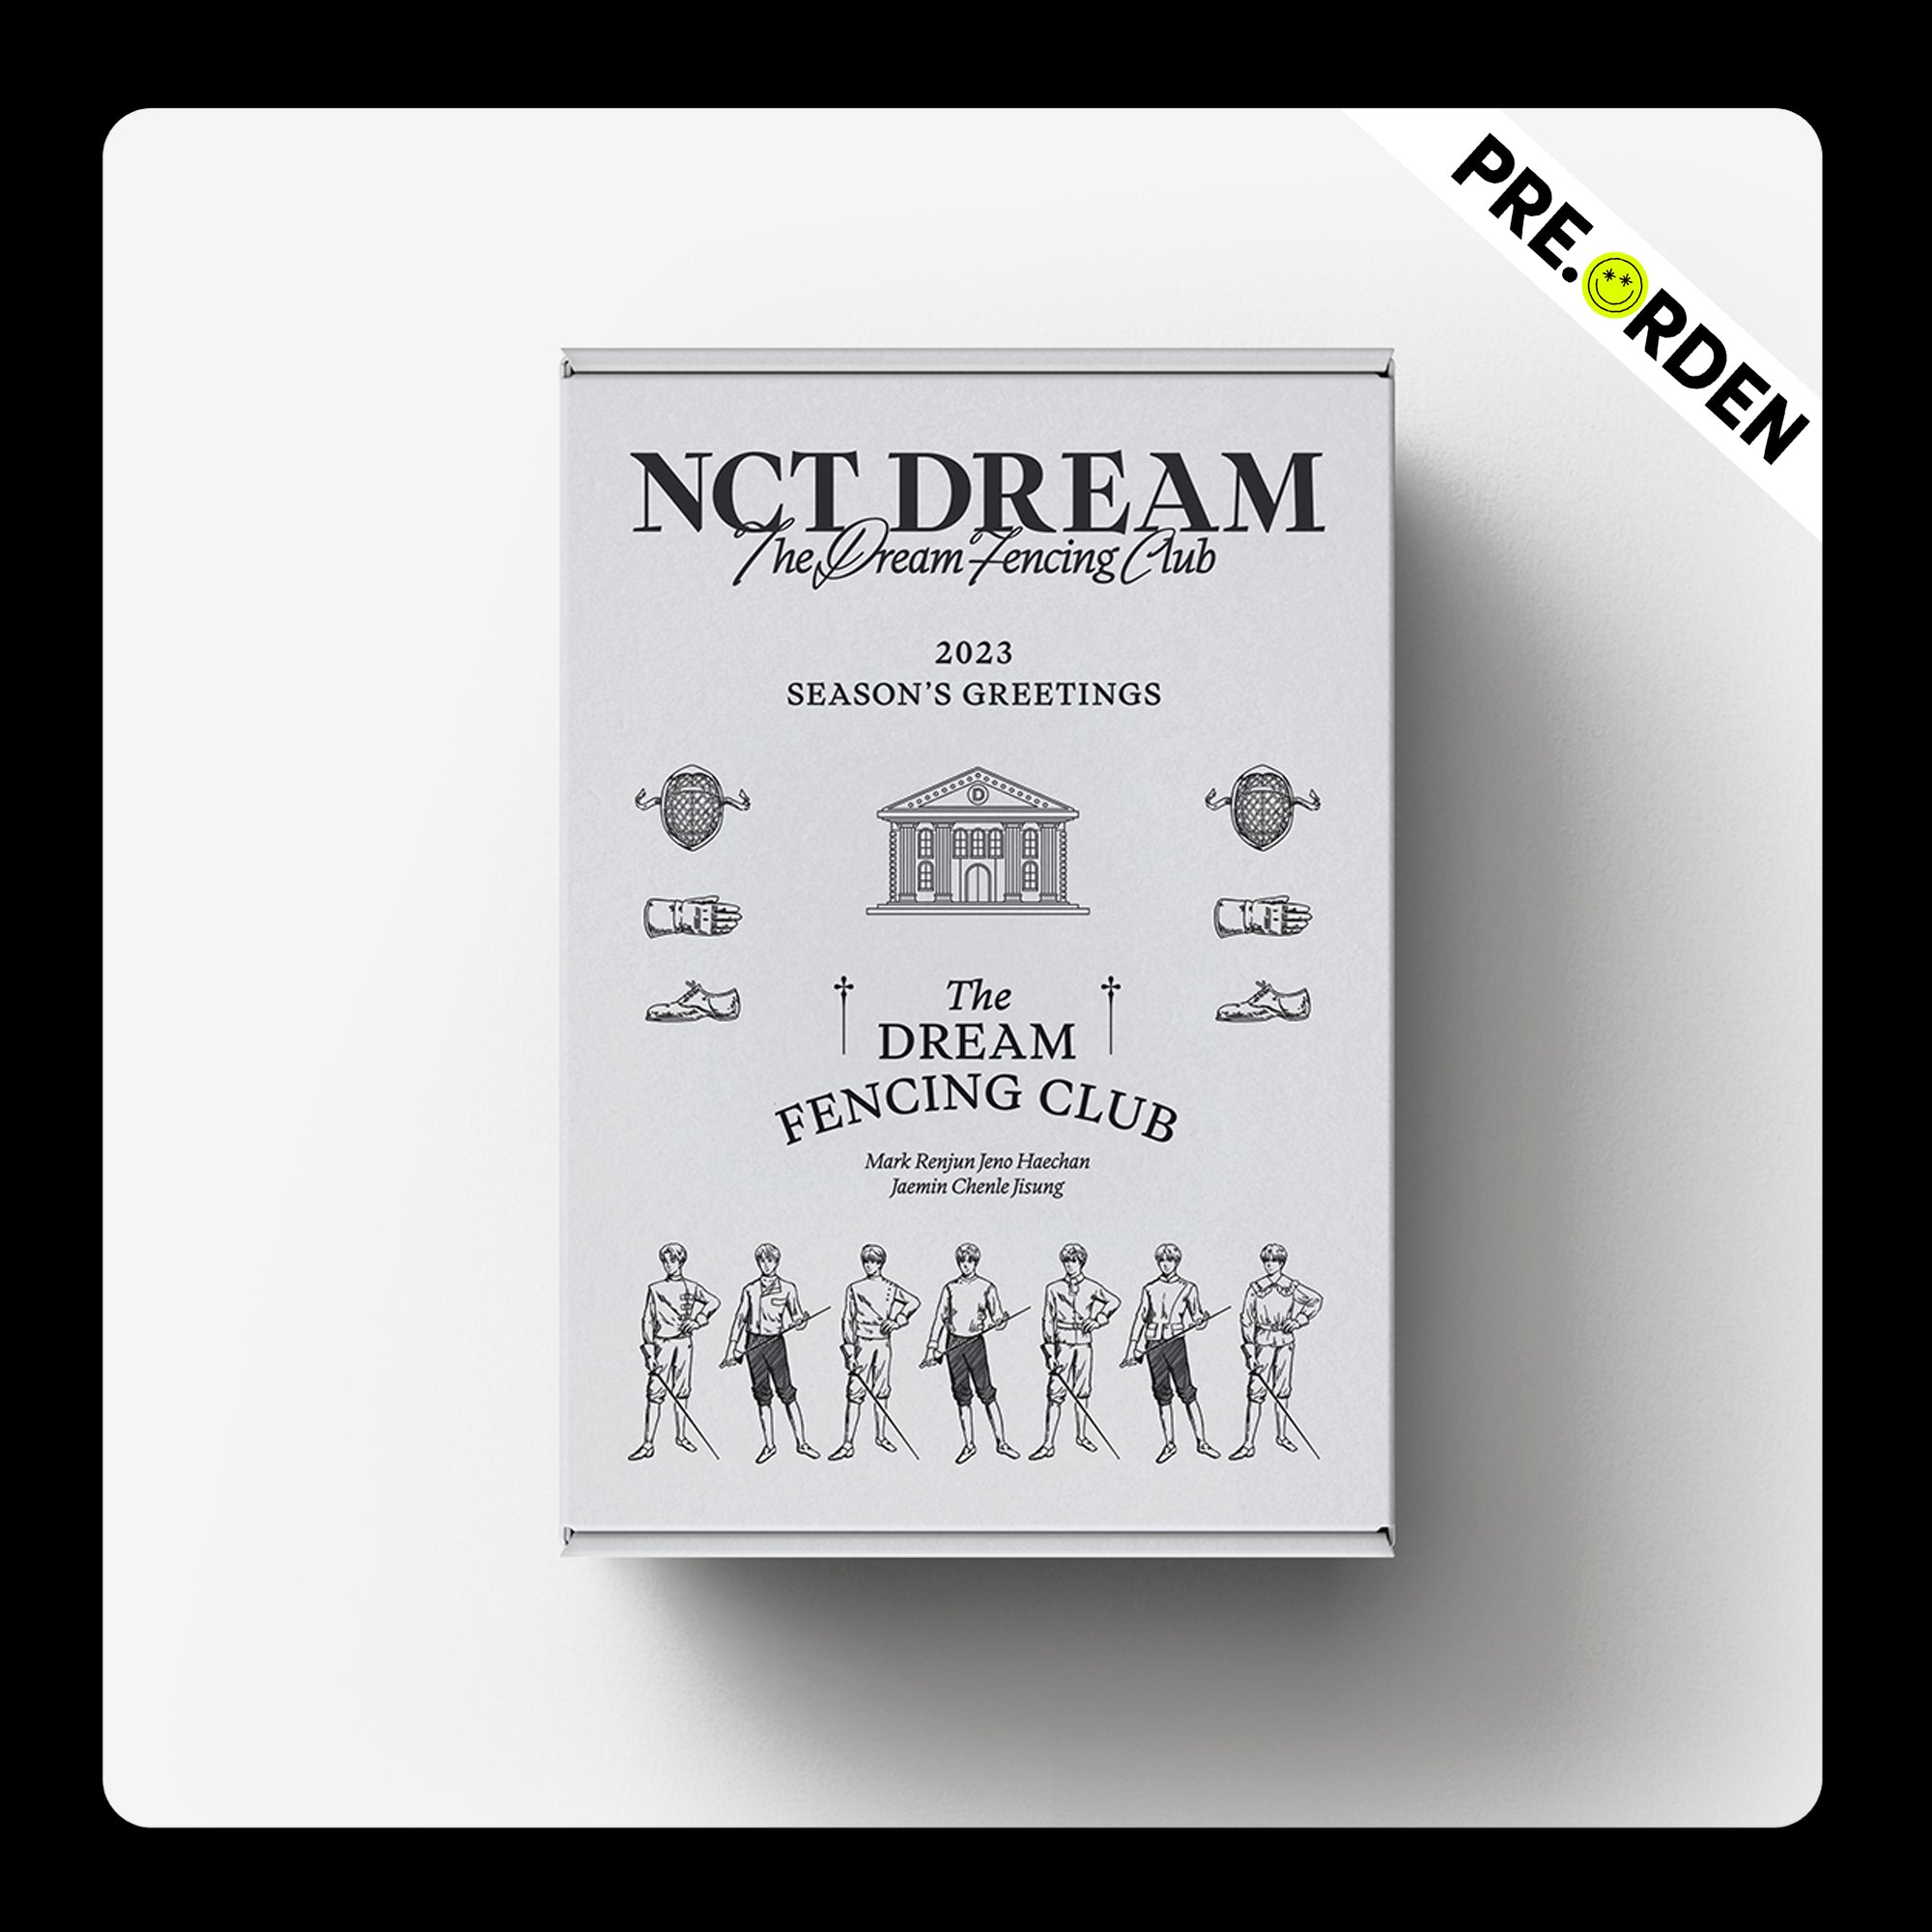 NCT Dream - Season's Greetings 2023